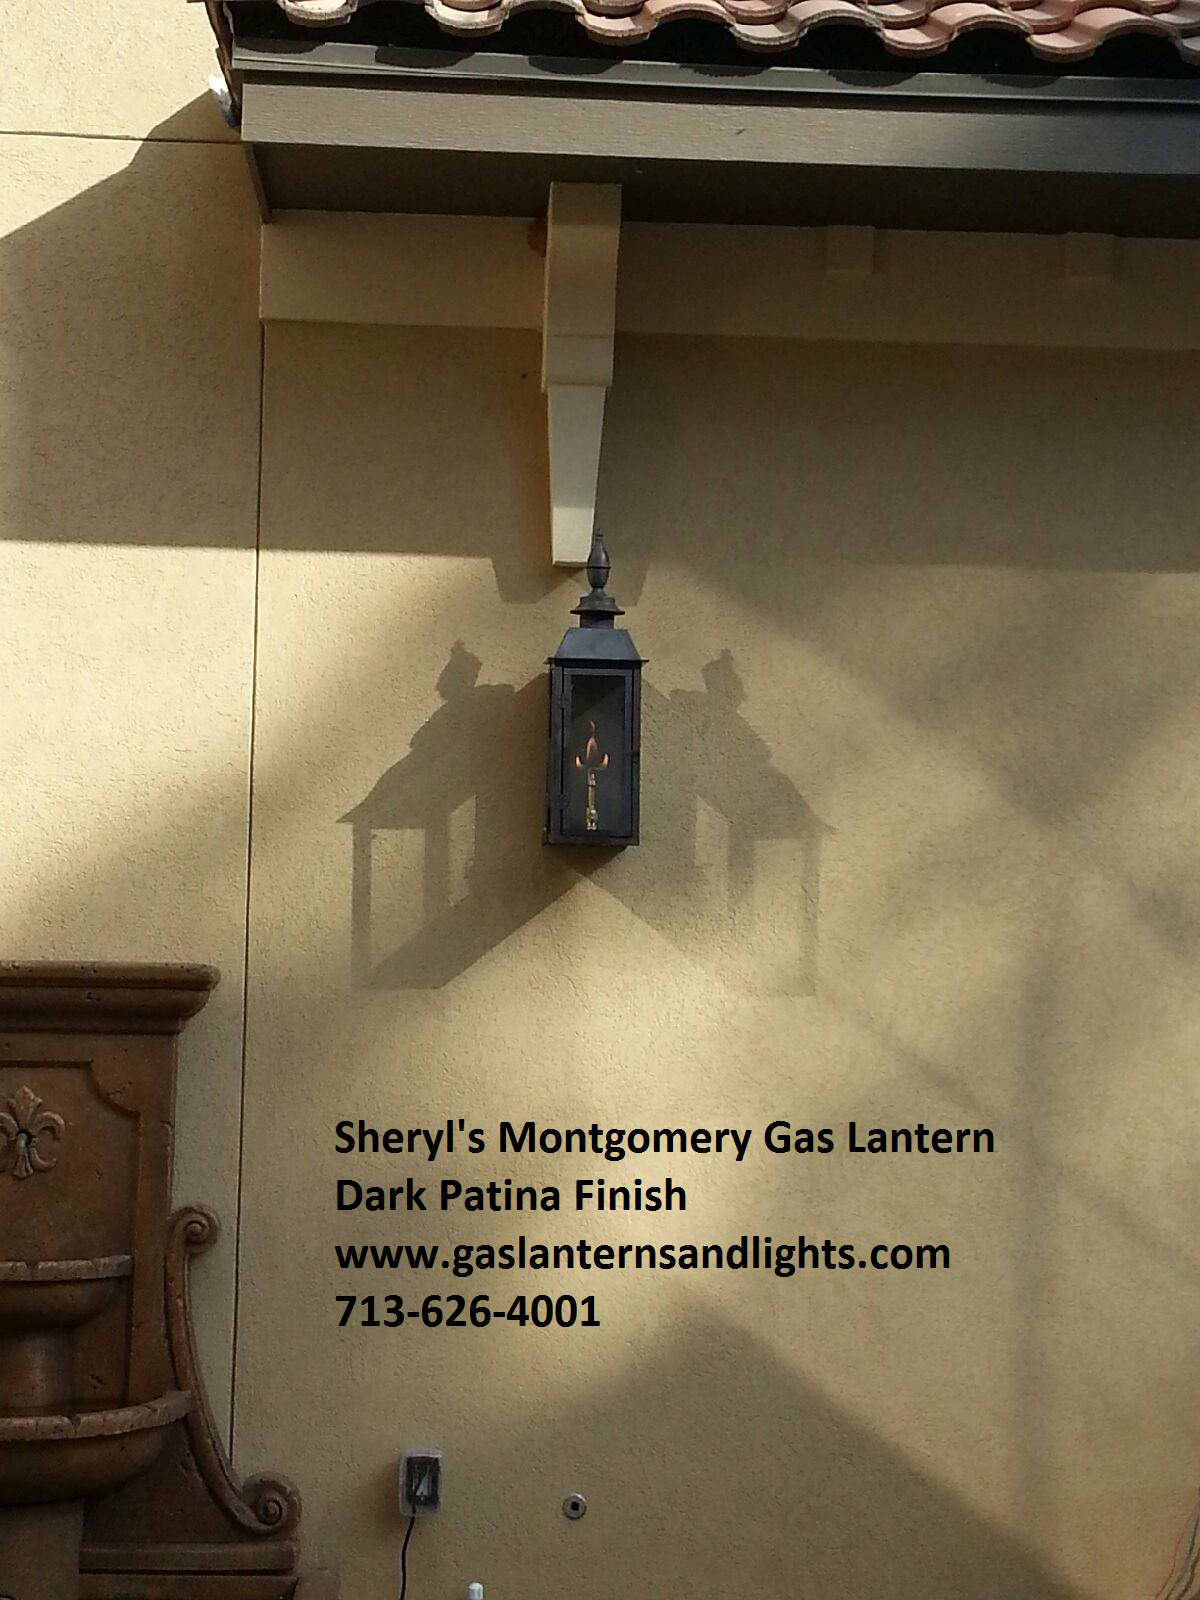 Sheryl's Montgomery Gas Lanterns